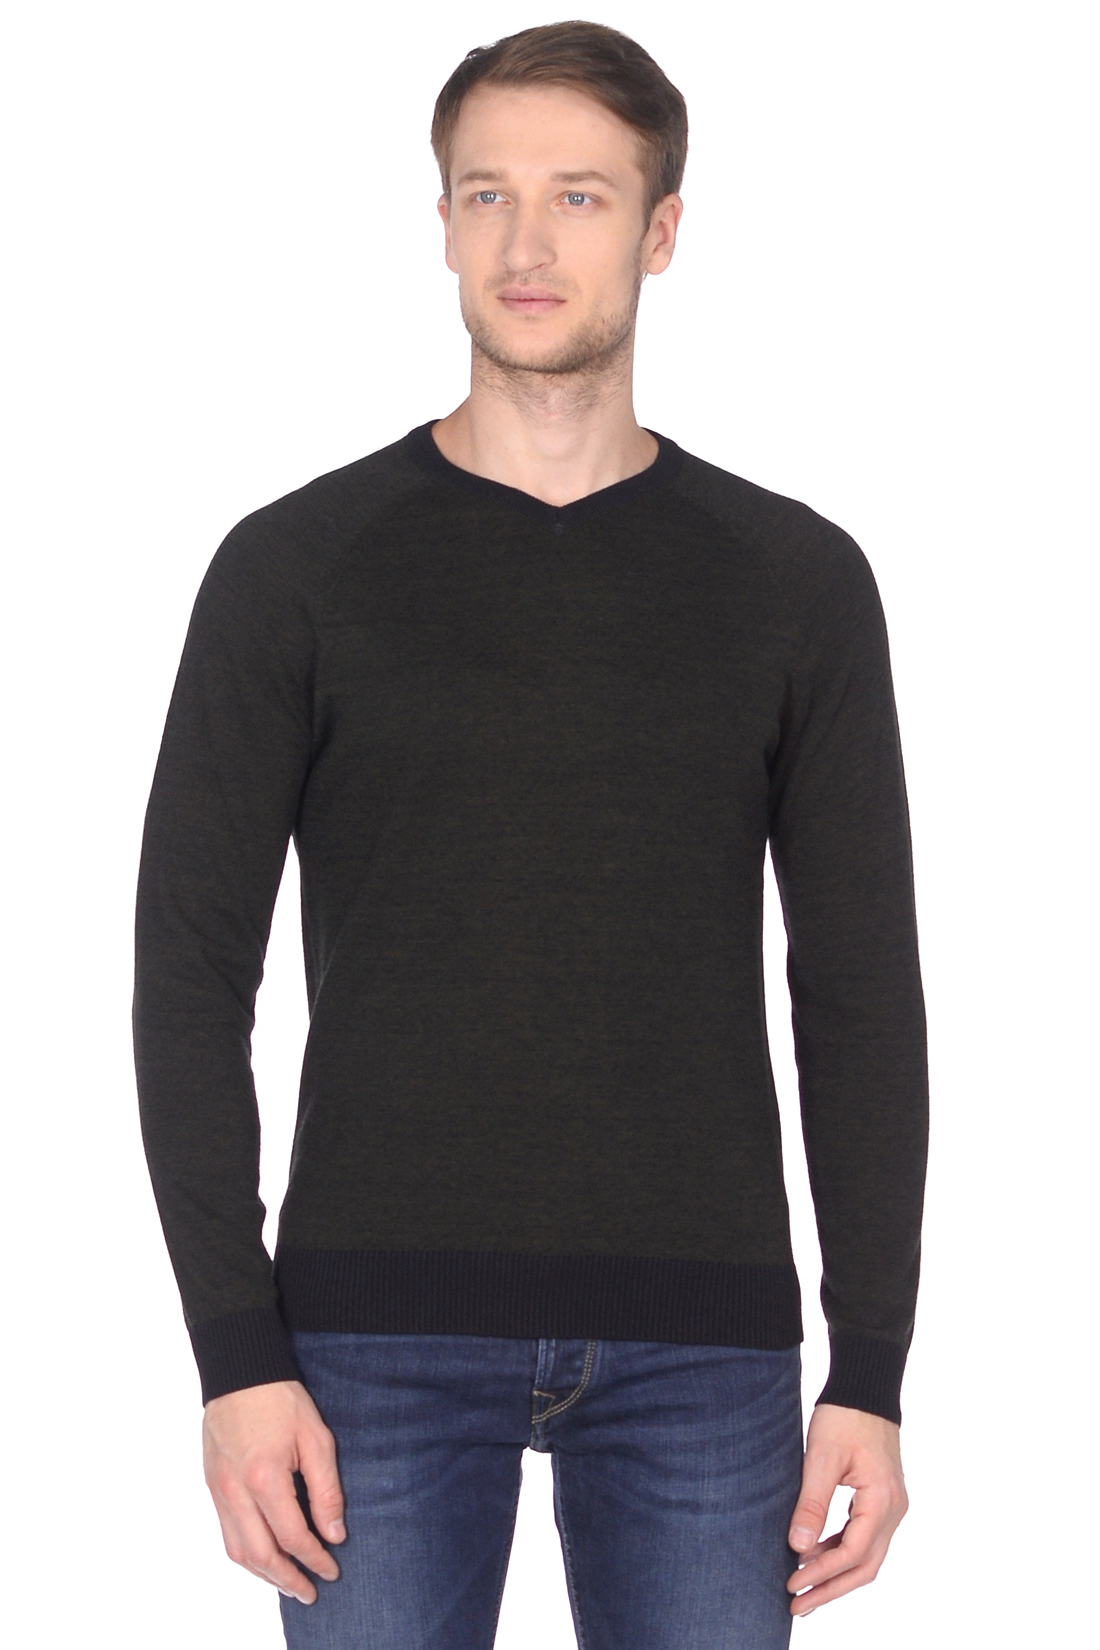 Пуловер с рукавами-реглан (арт. baon B638557), размер L, цвет зеленый Пуловер с рукавами-реглан (арт. baon B638557) - фото 1